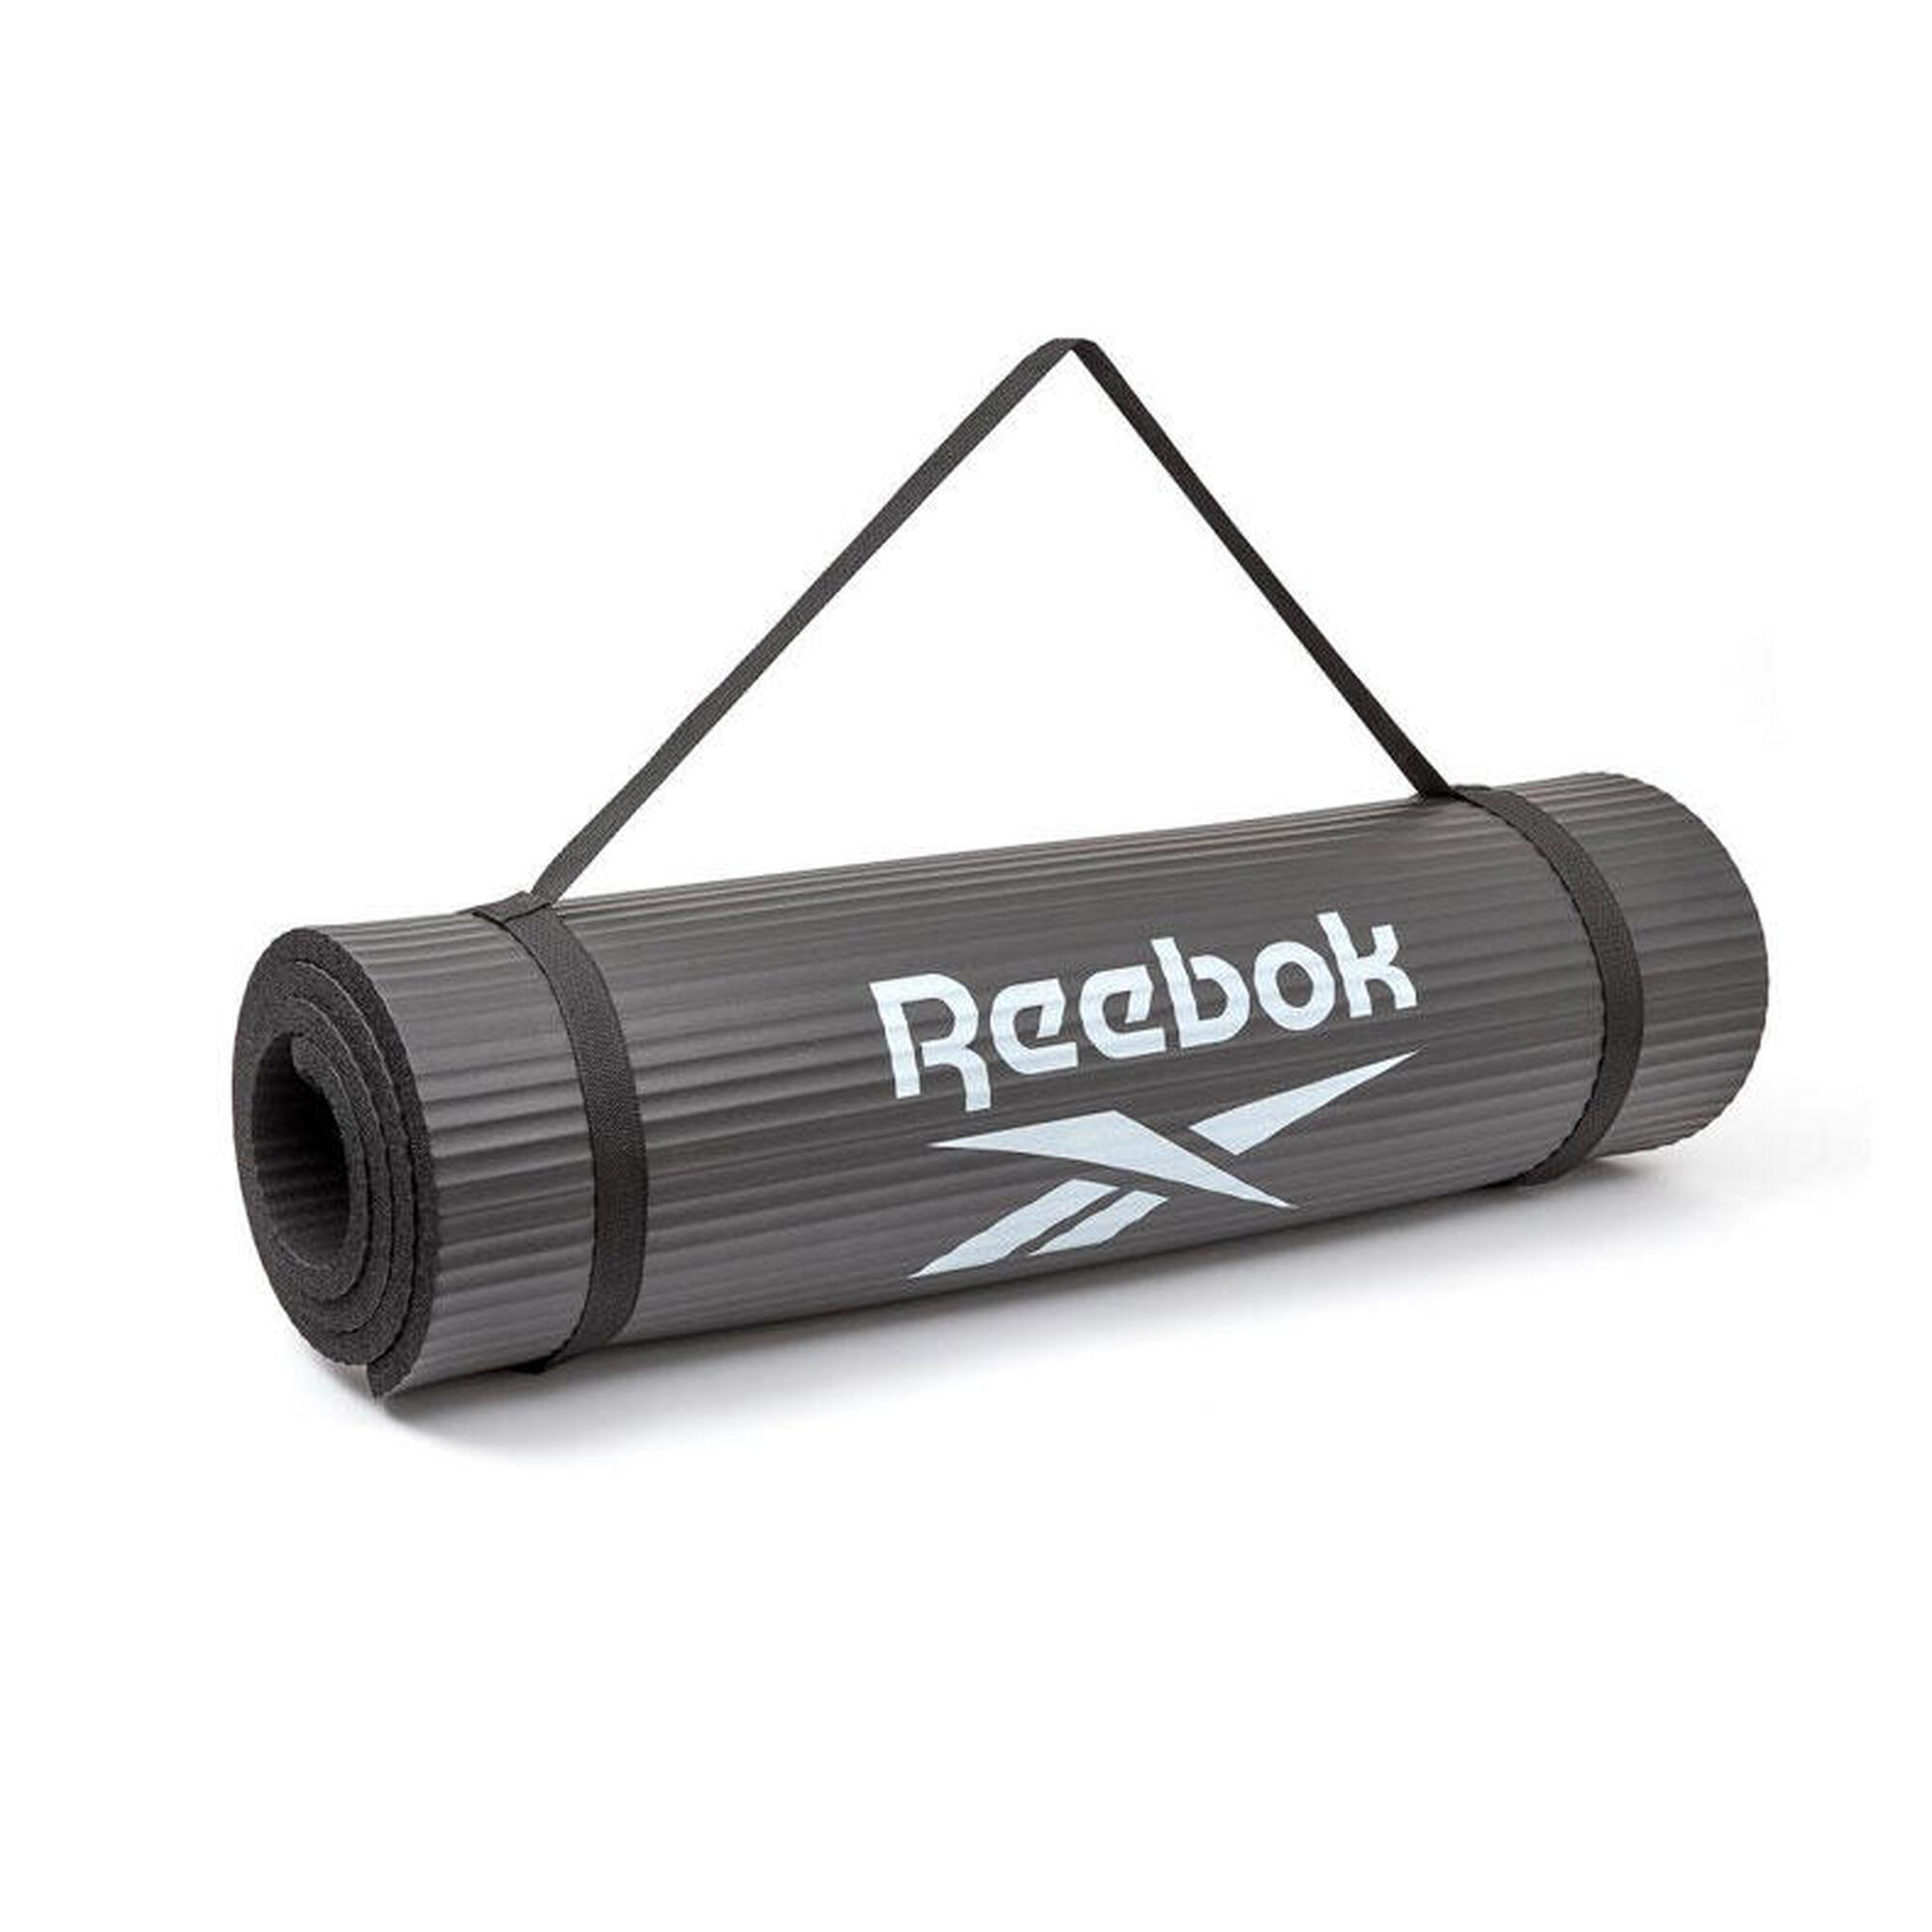 Colchoneta de entrenamiento Reebok - 15mm - Negra